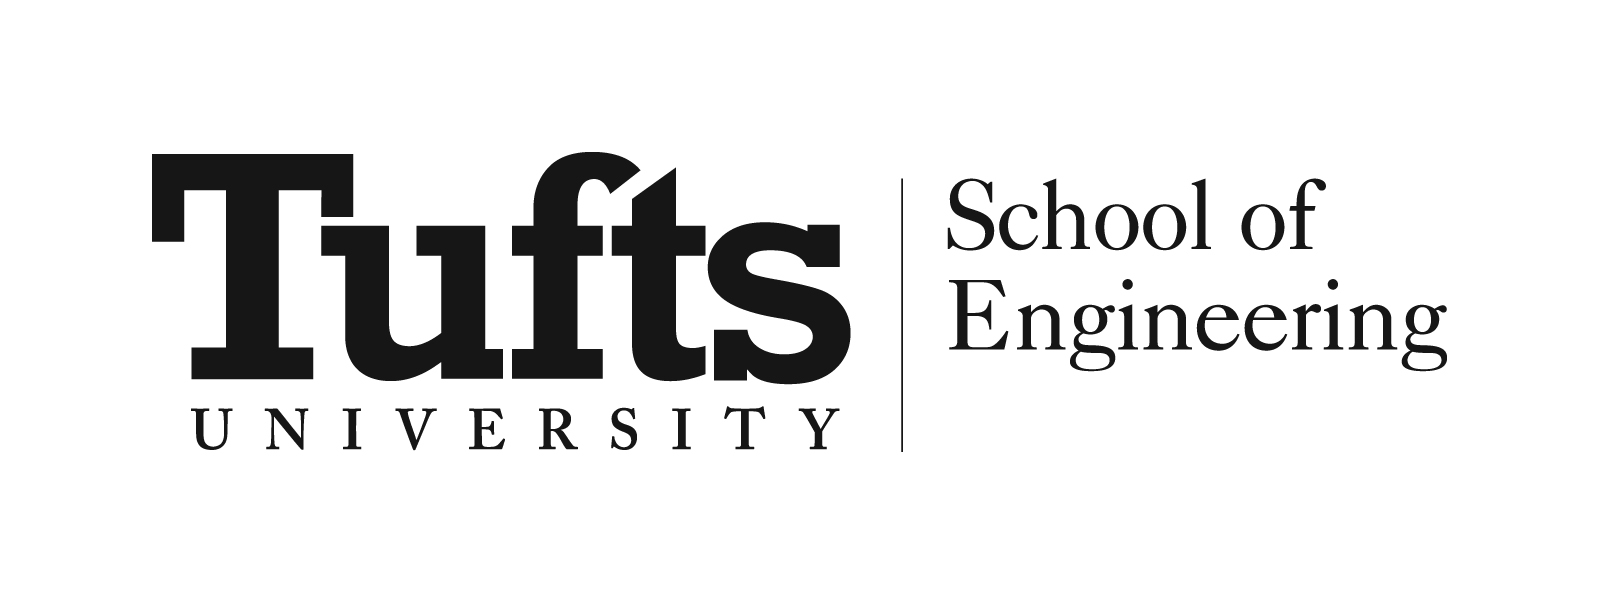 Tufts University School of Engineering